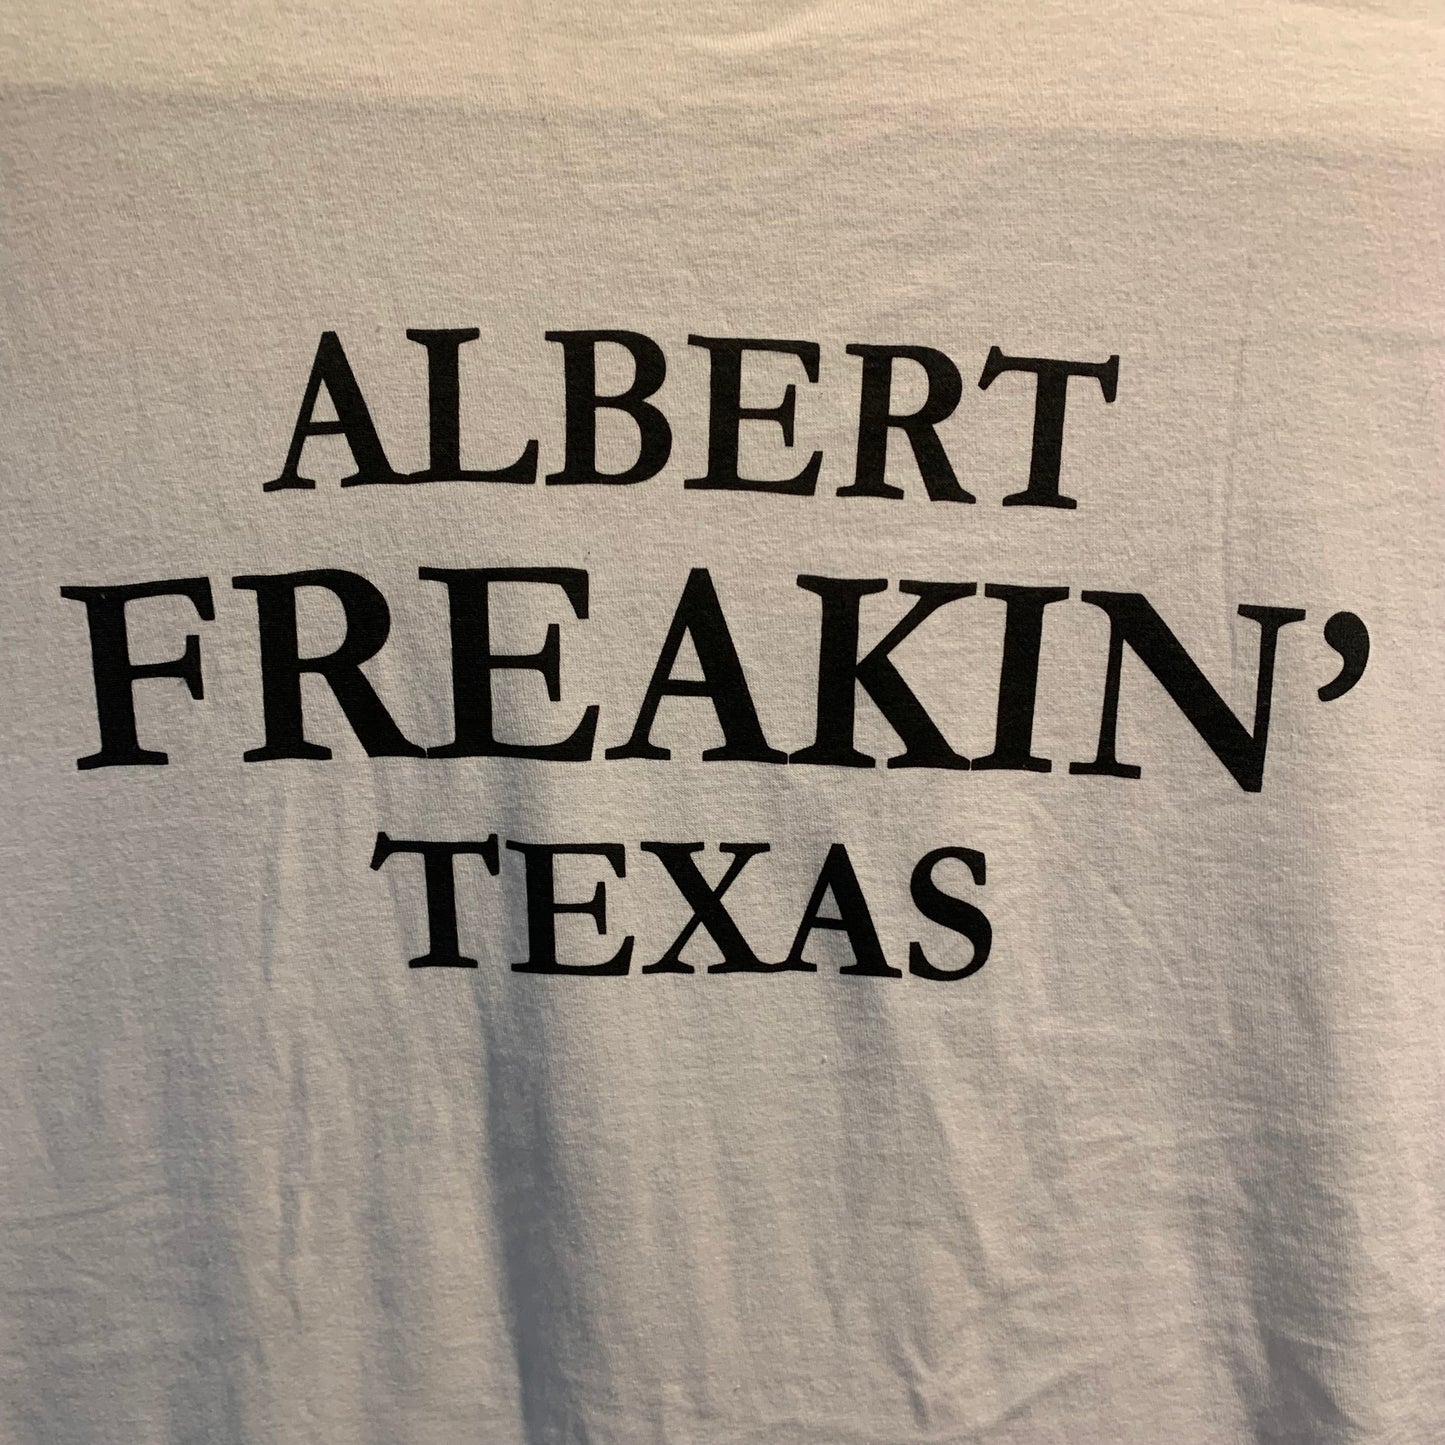 ALBERT FREAKIN'TEXAS